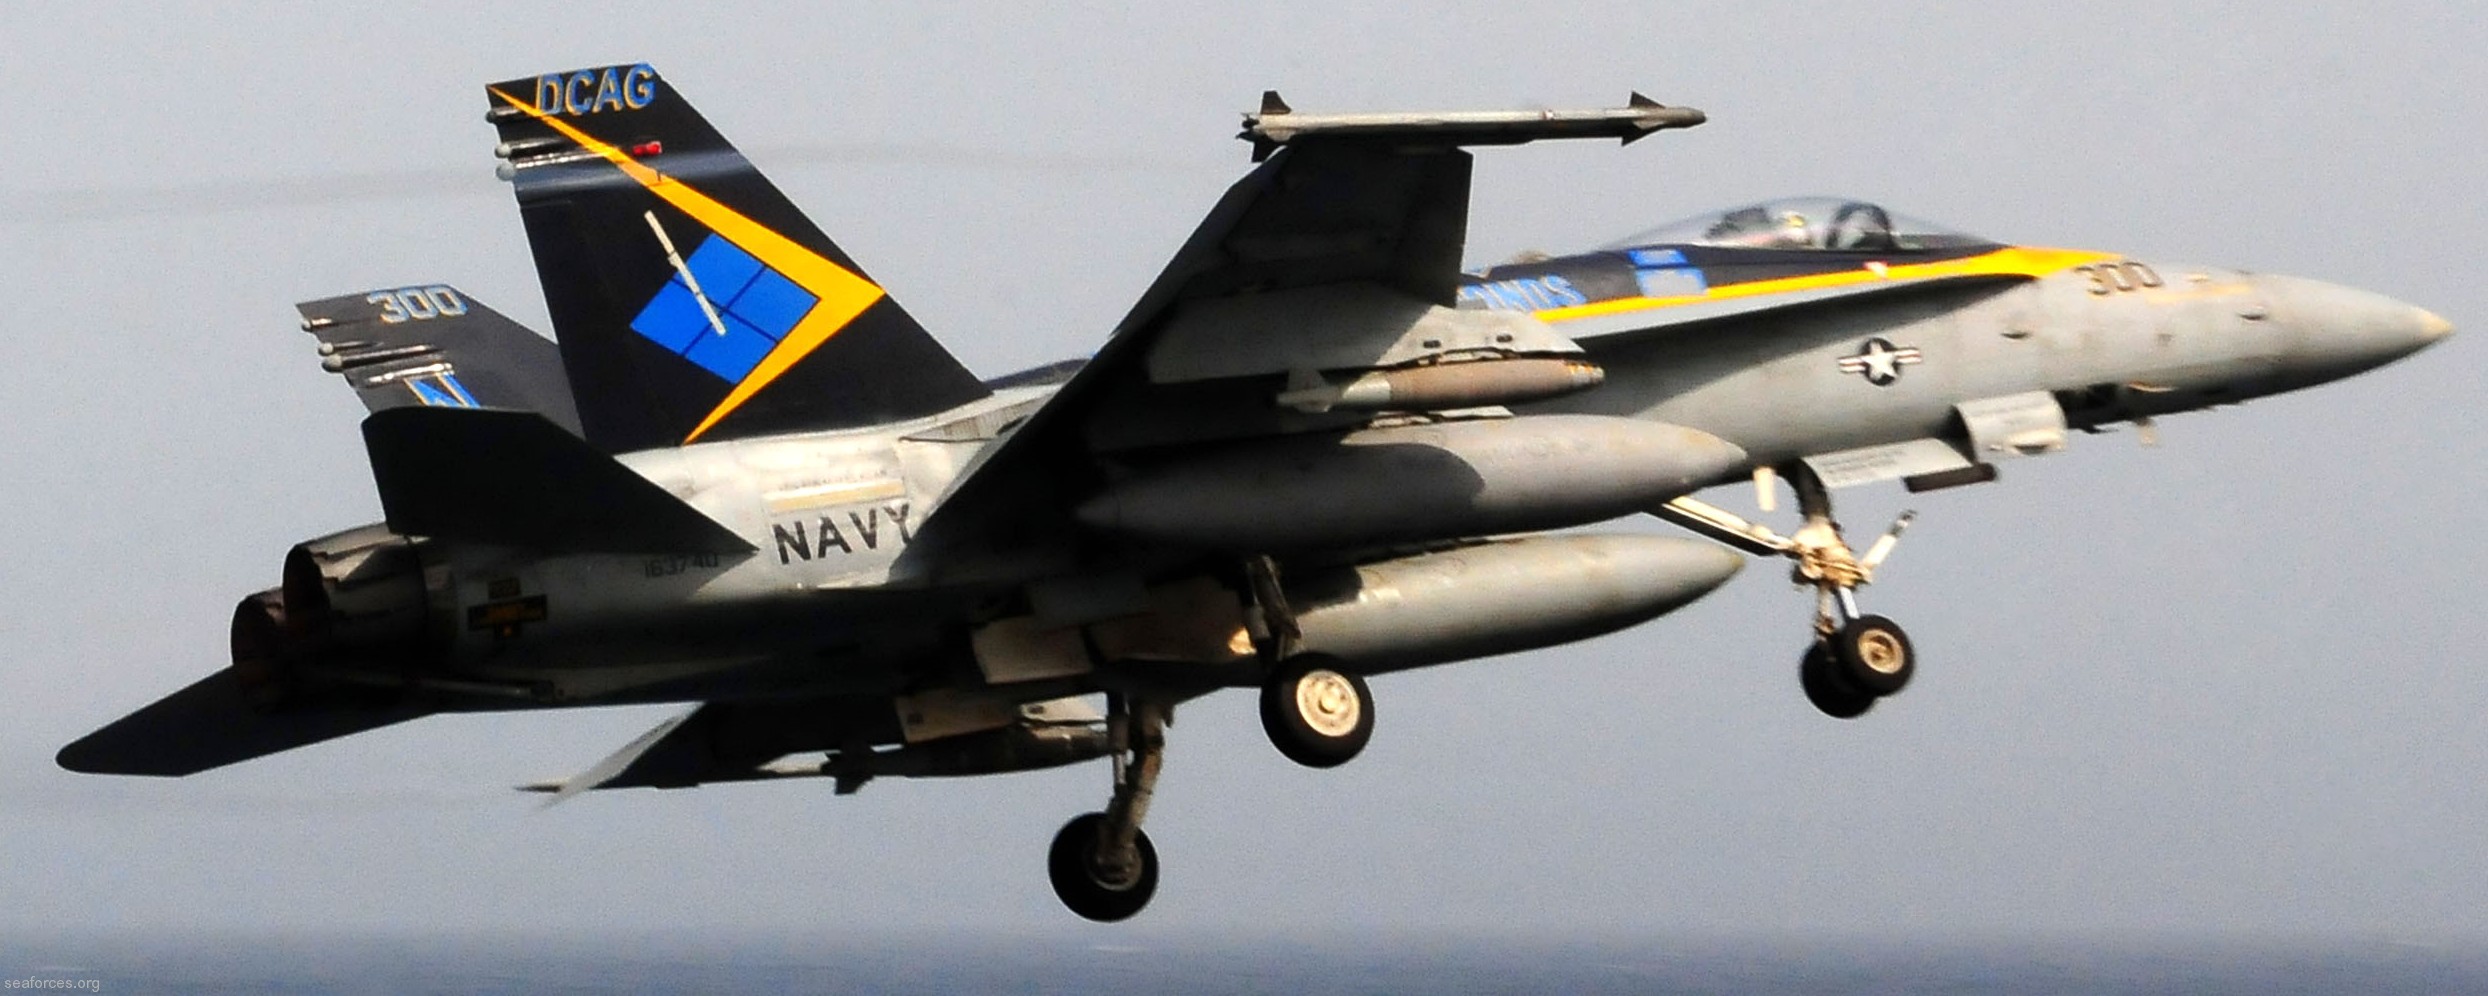 vfa-146 blue diamonds strike fighter squadron f/a-18c hornet carrier air wing cvw-14 uss ronald reagan cvn-76 87